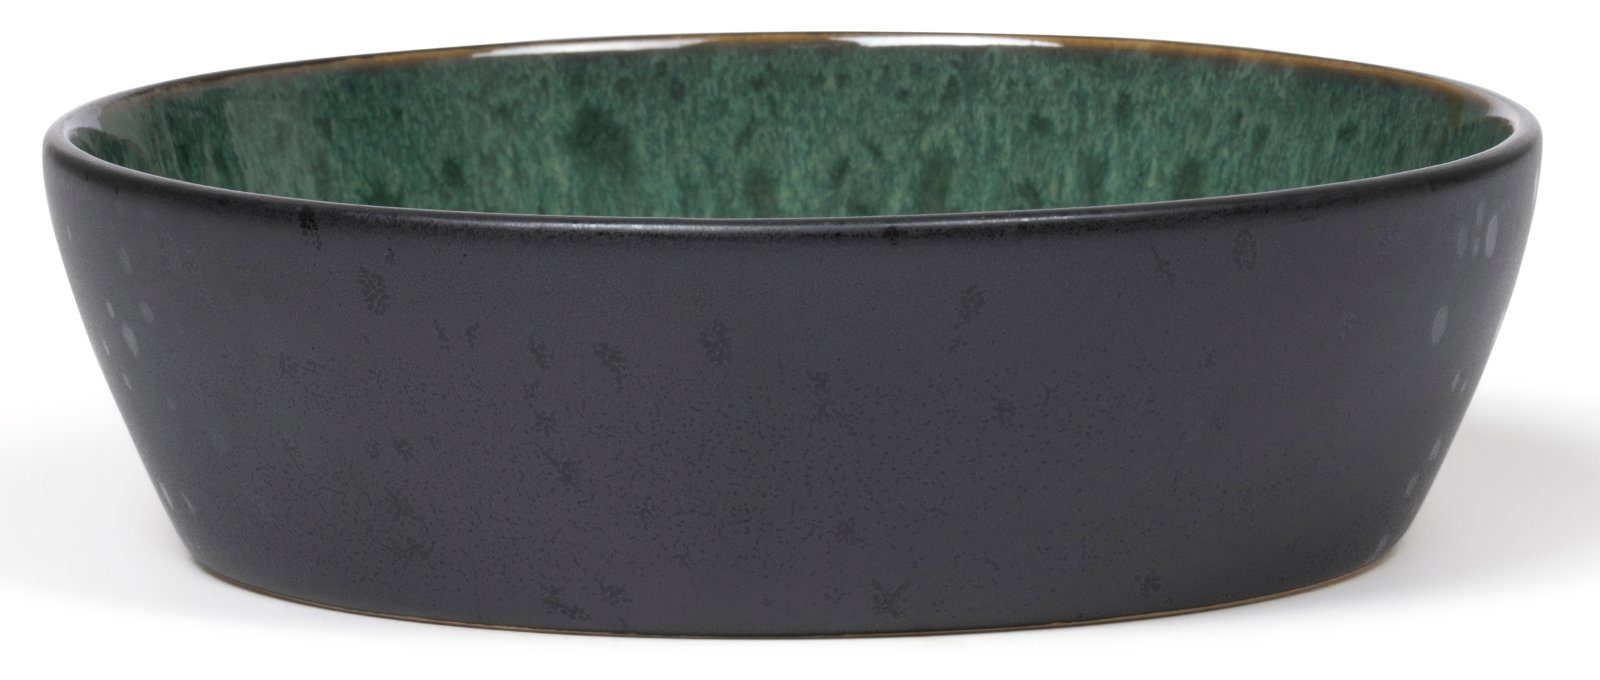 Bitz Schale Bowl black / green 18 cm, Steingut, (Bowls)